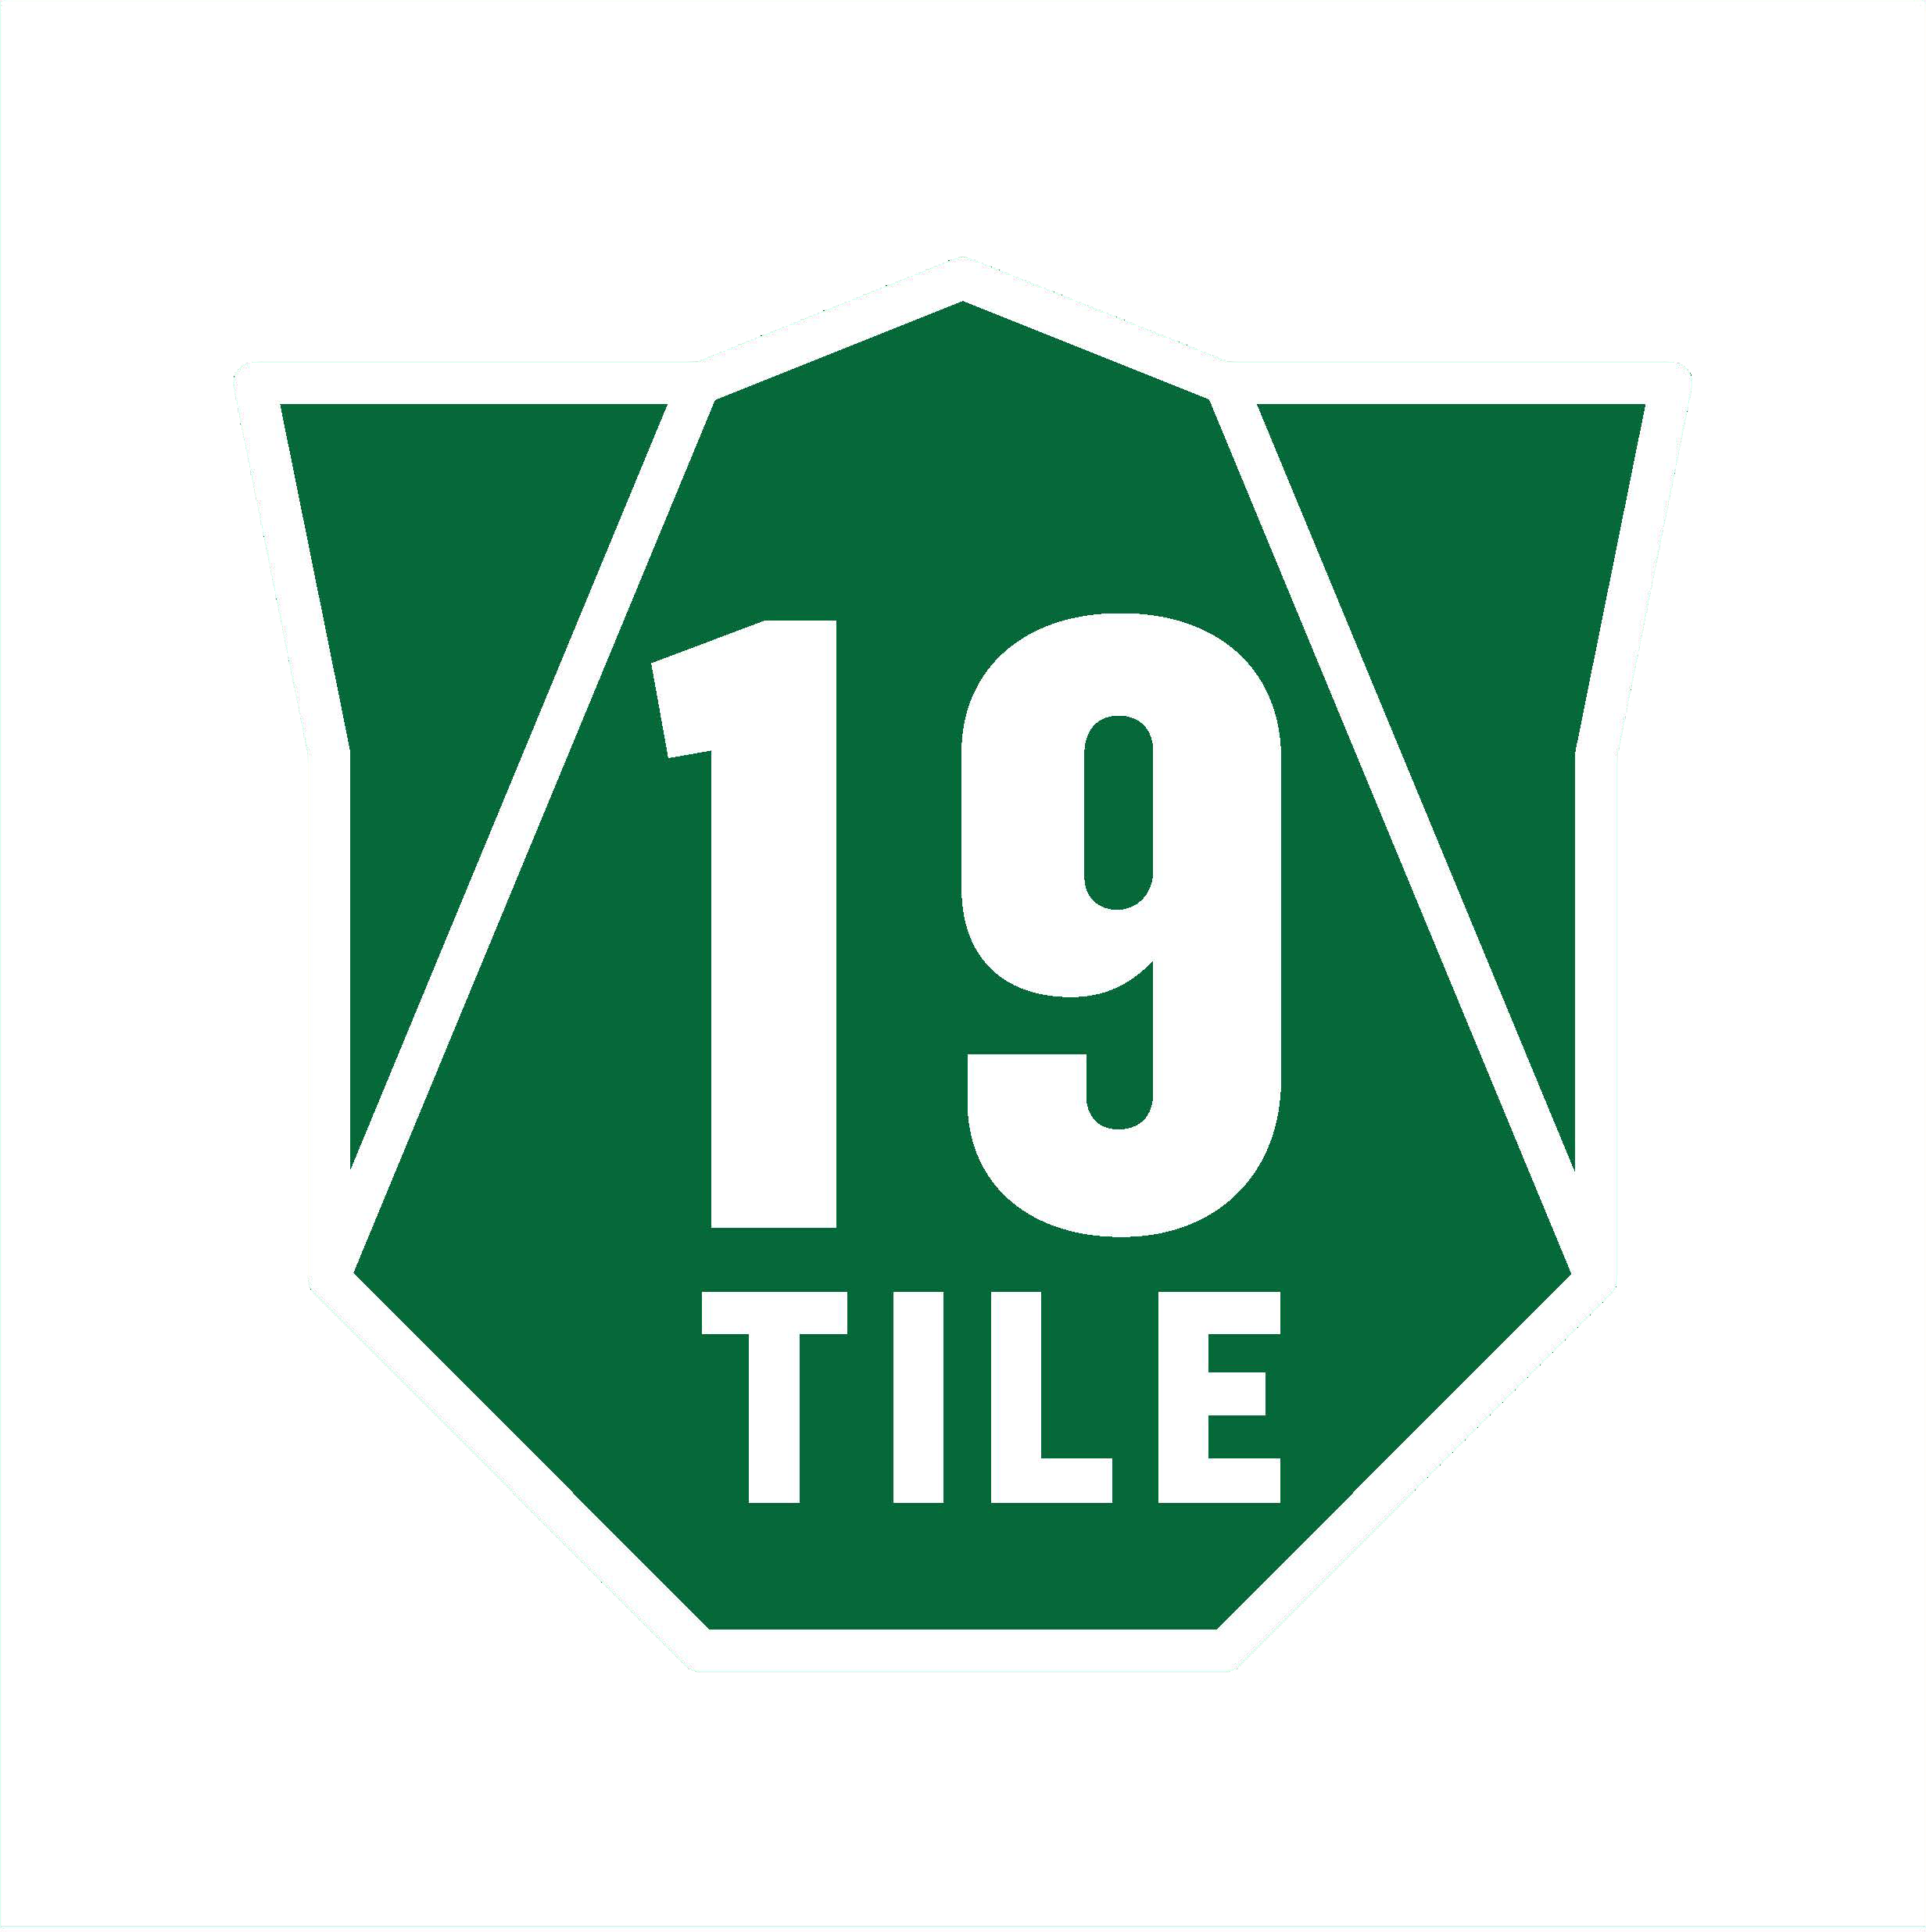 19 Tile Ceramic Concept logo